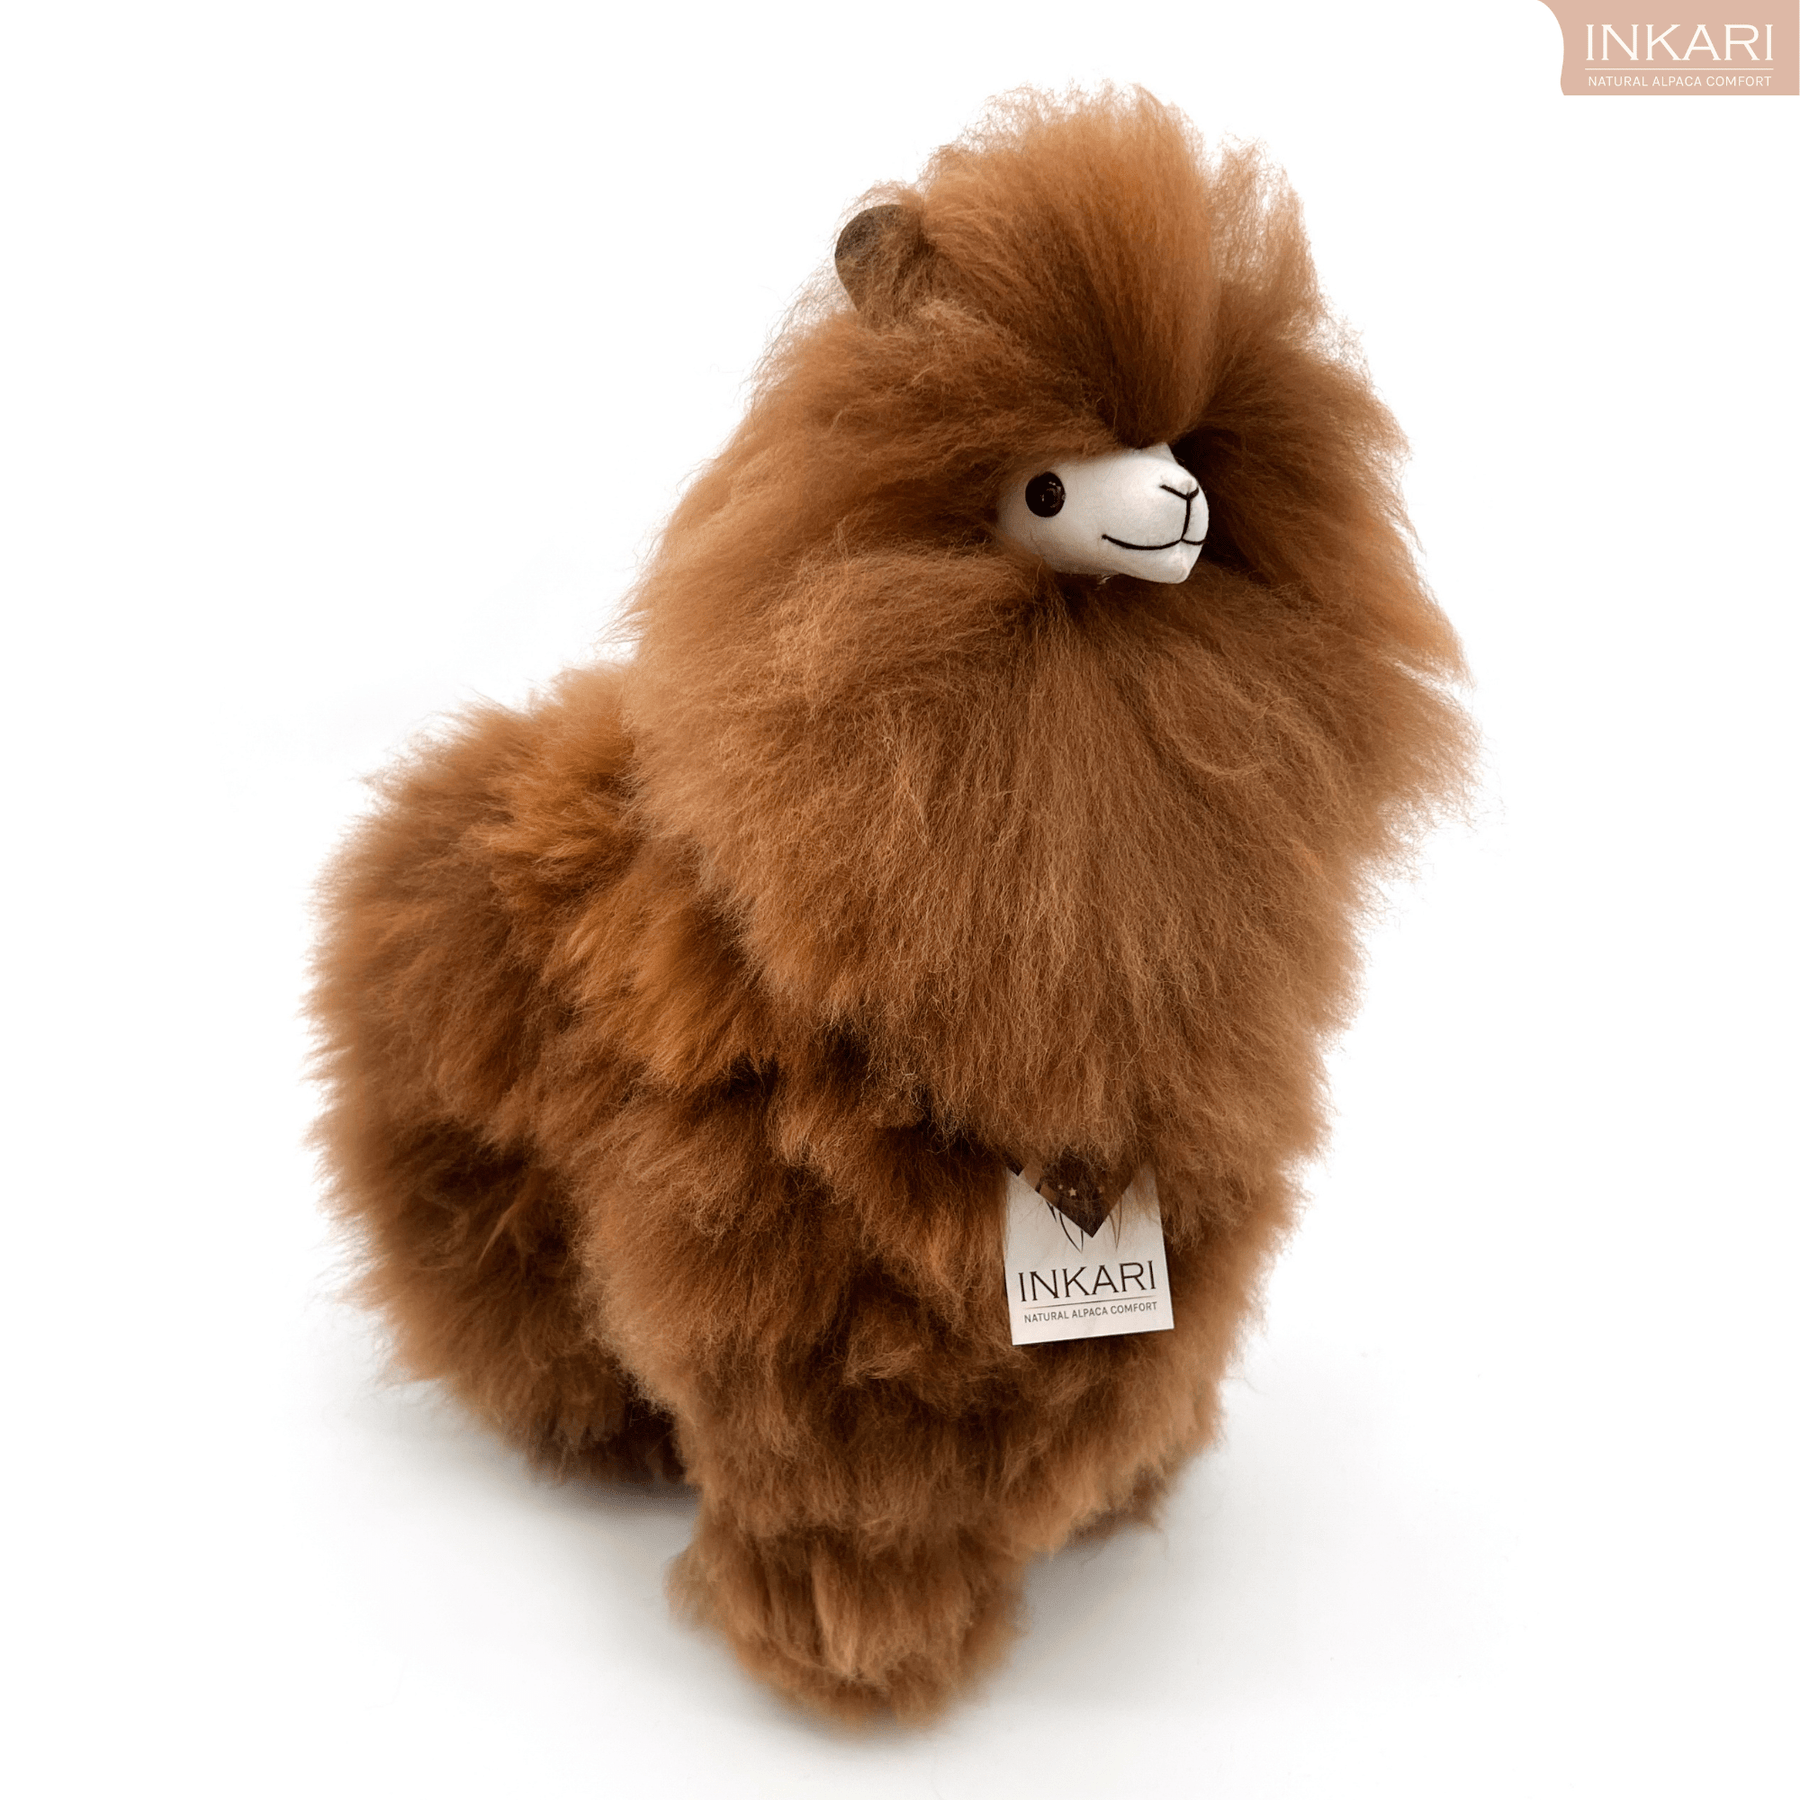 Monsterfluff - Large (50cm) - Alpaca Stuffed Animal